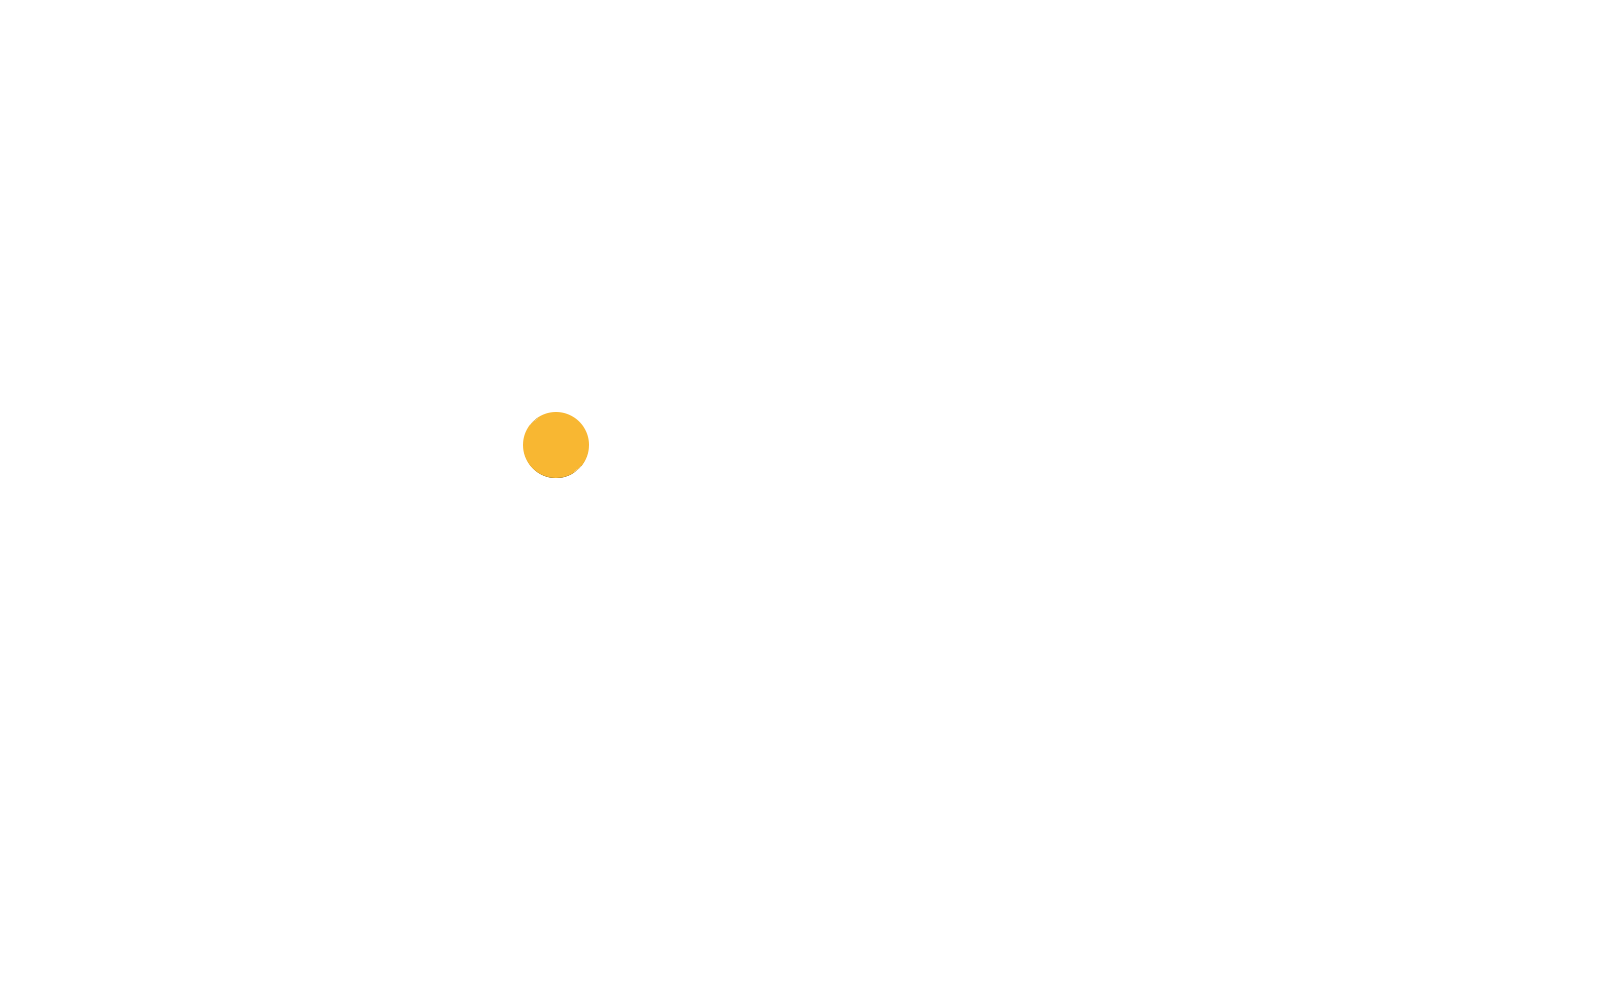 Orbit Gym Logo